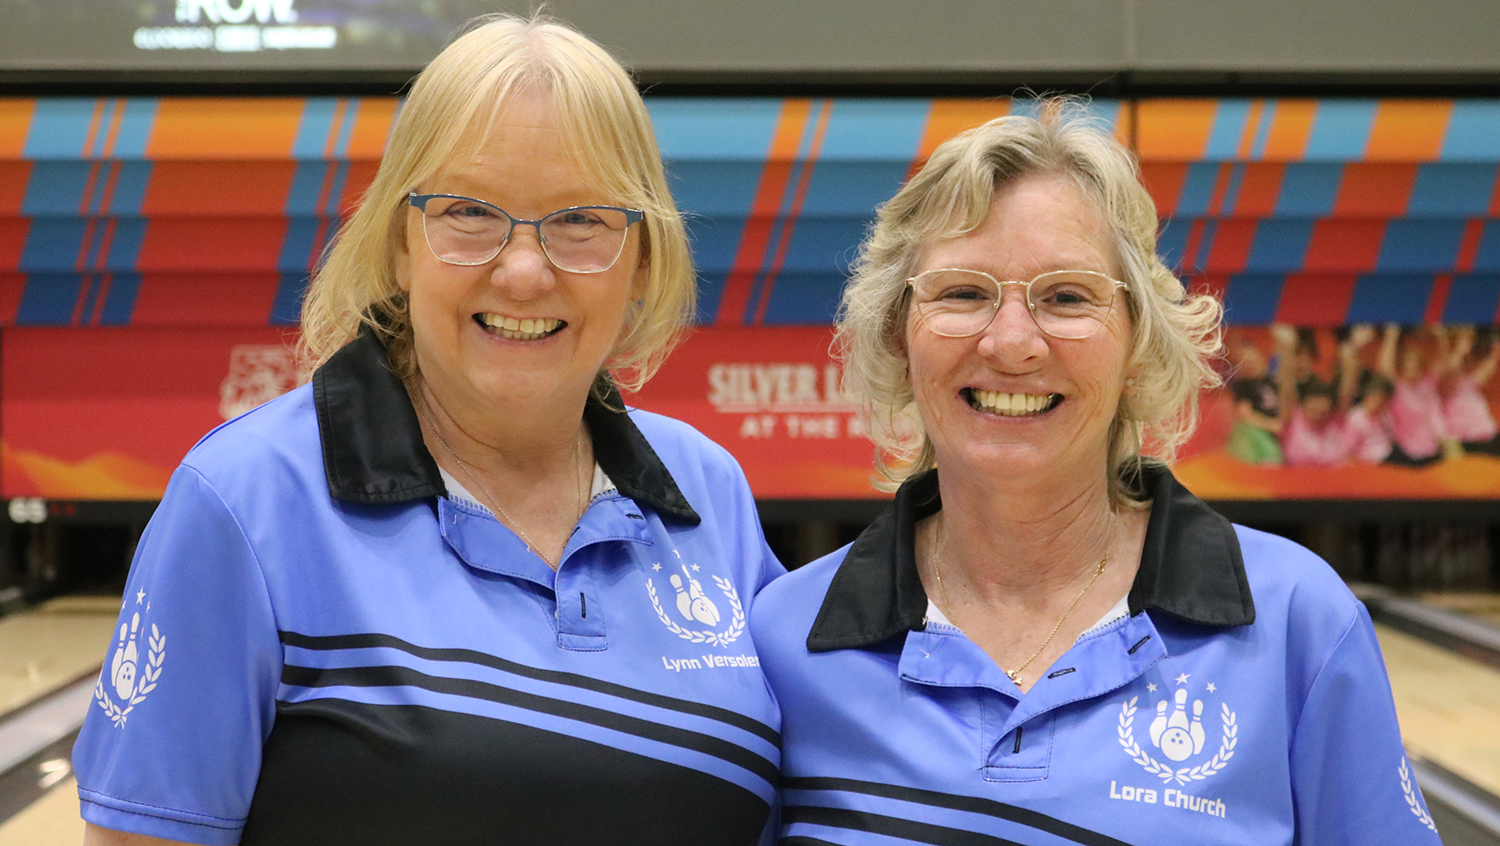 Lynn Versolenko and Lora Church at the 2024 USBC Women's Championships